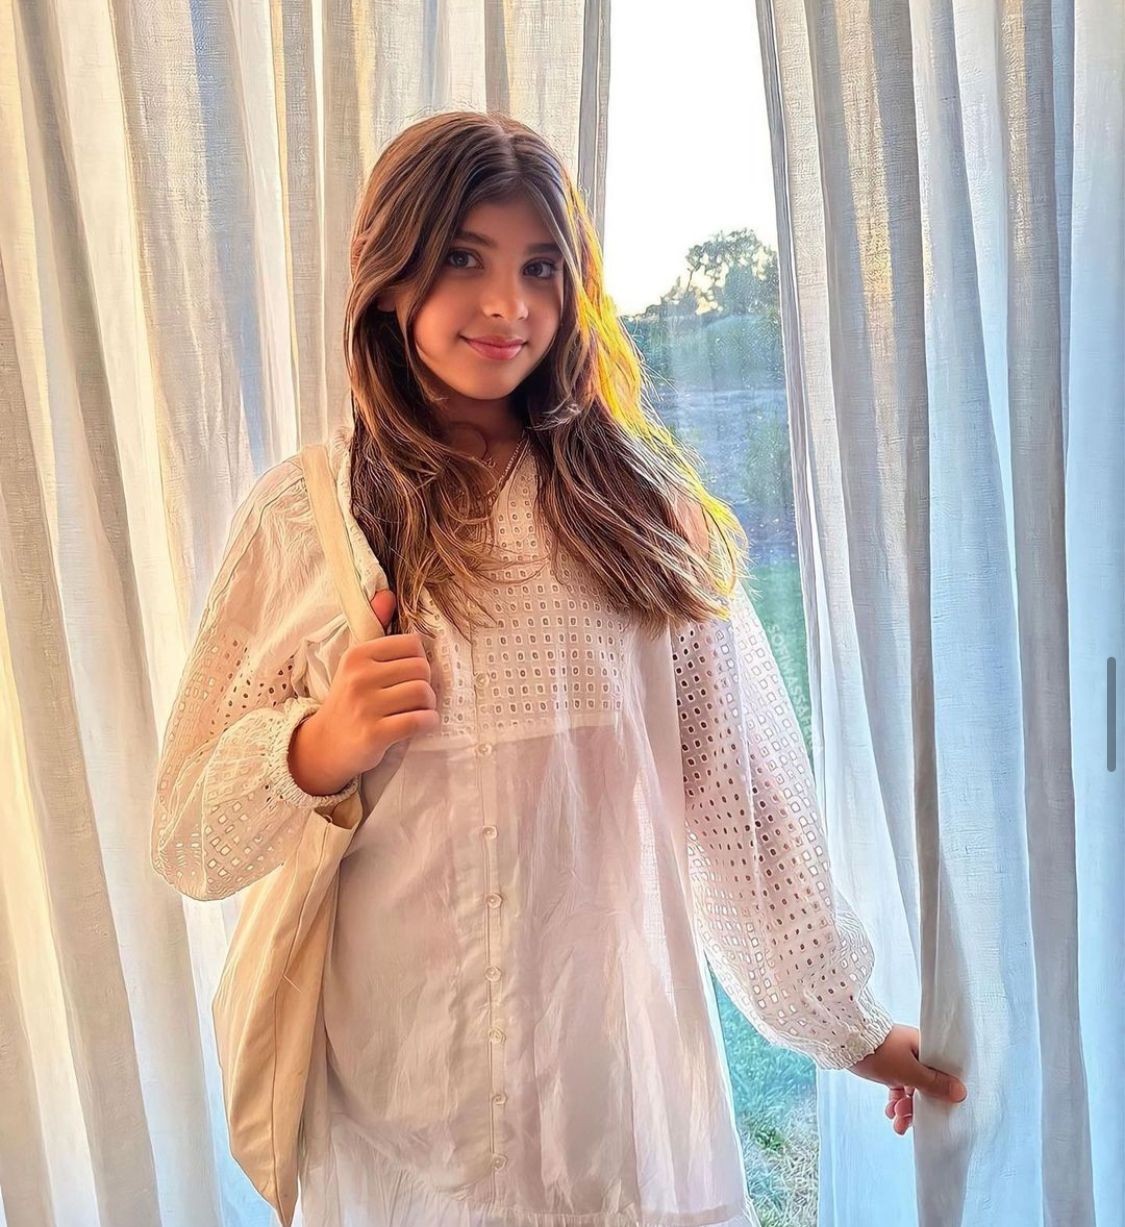 Sofia Reymond está a cara da mãe, Grazi Massafera — Foto: Instagram